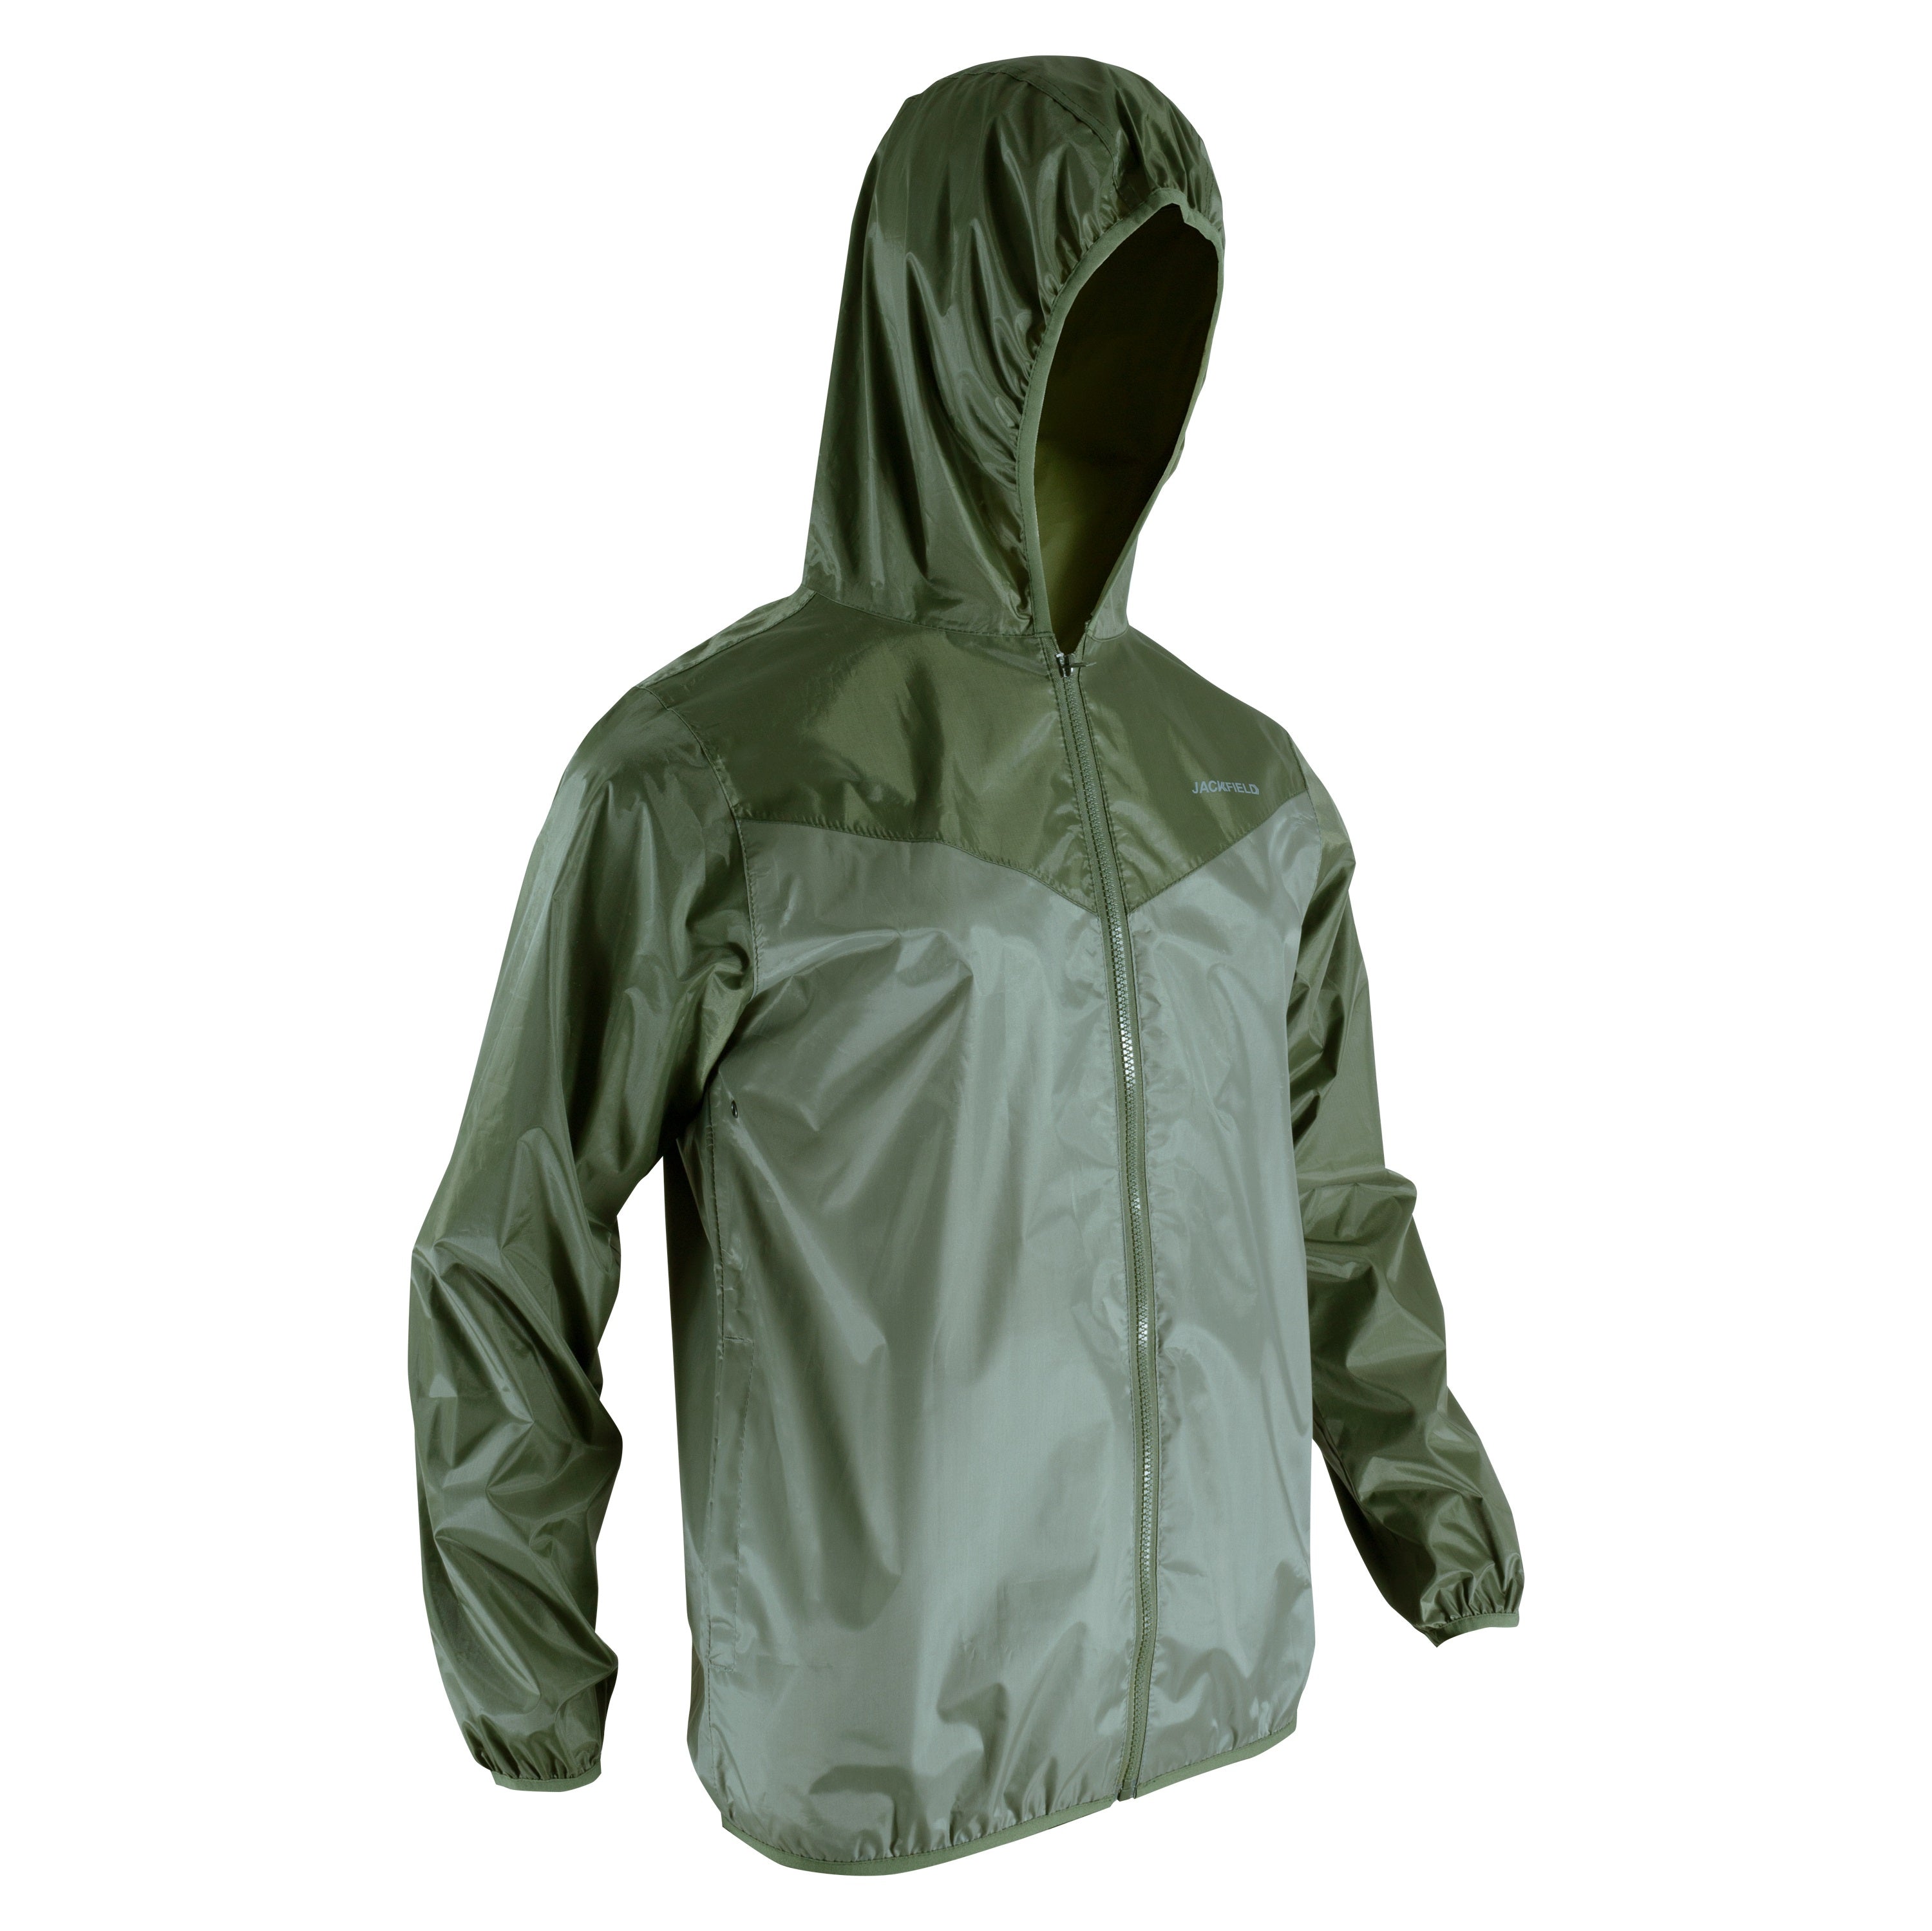 2 tones polyester rain suit jacket and pants - Women’s